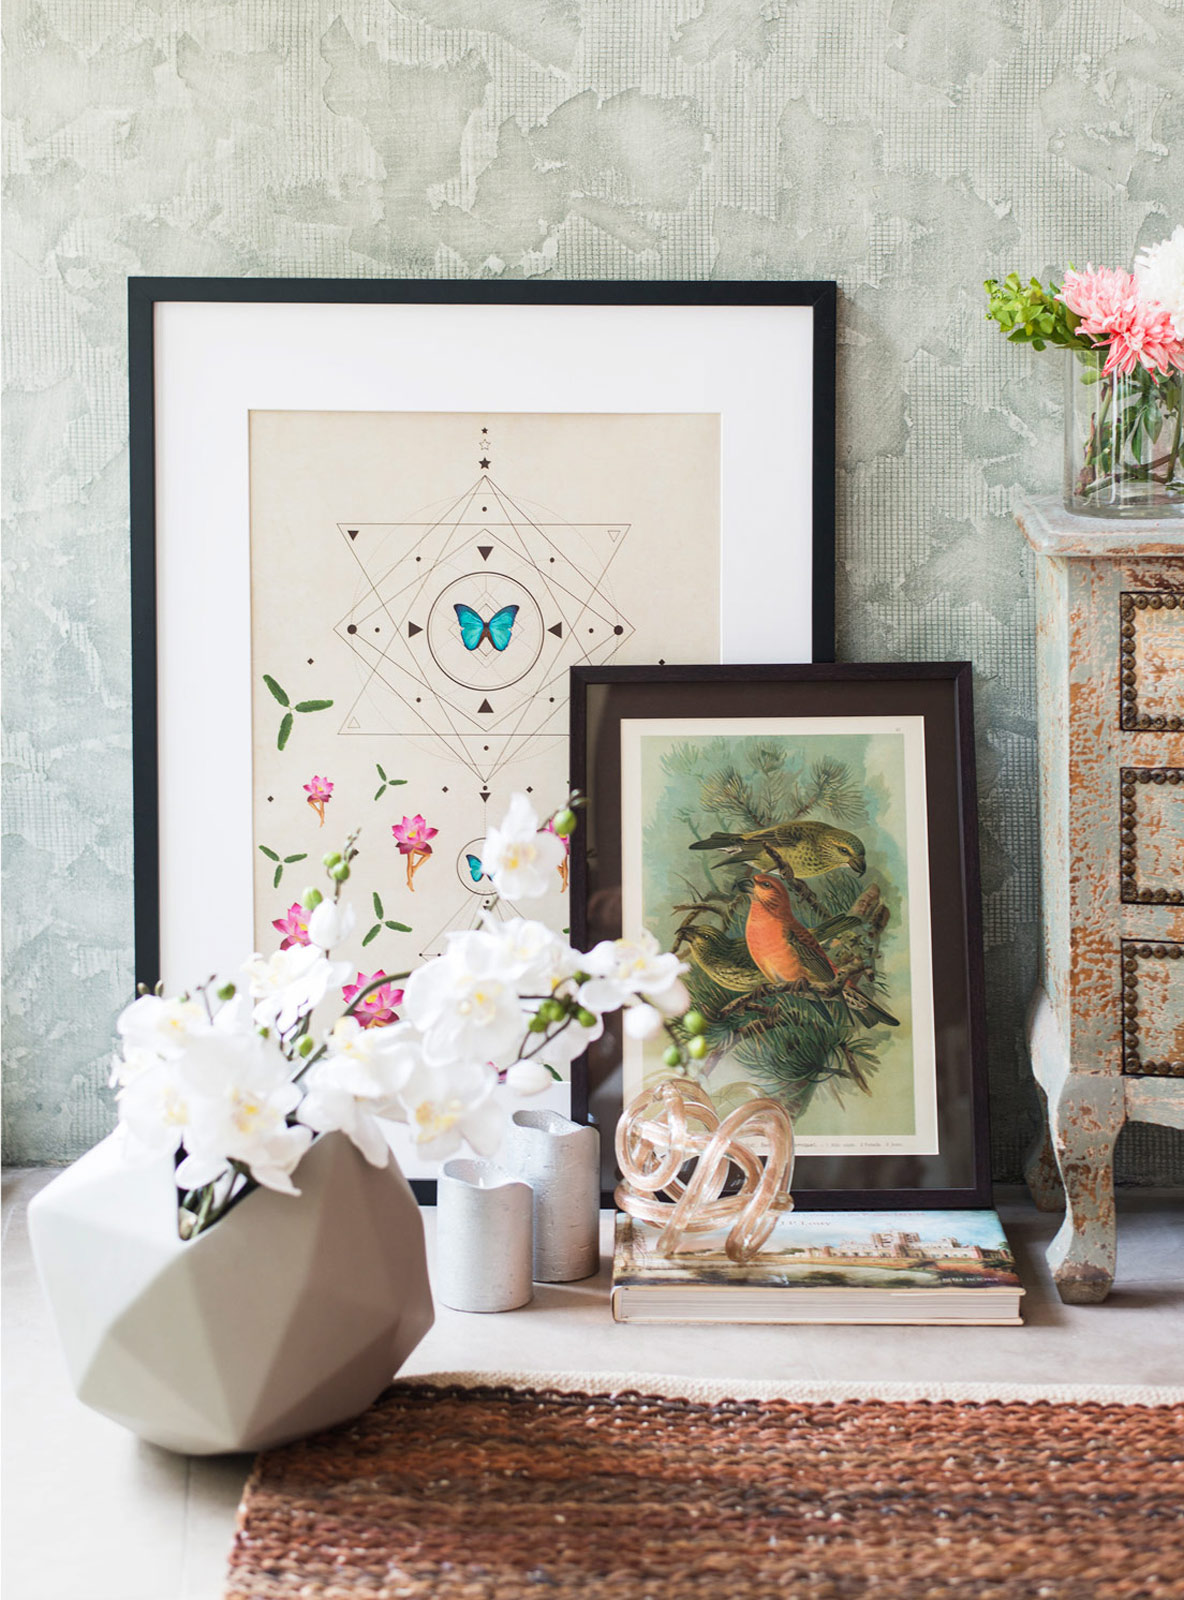 Romantic Corner Design With Artworks & Decorative Prints - Beautiful Homes